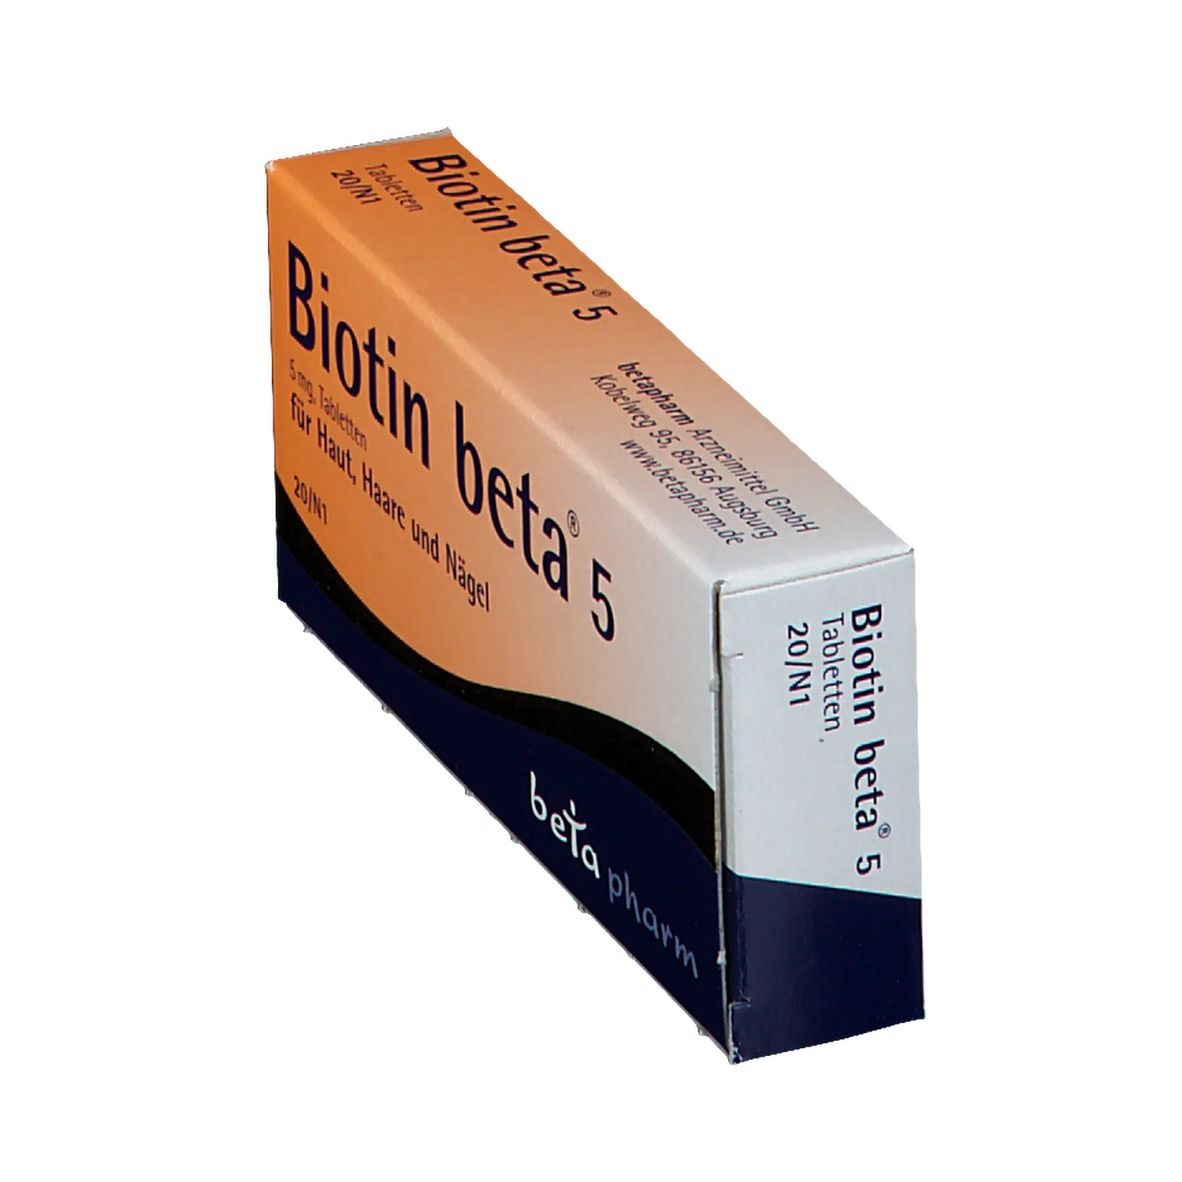 Biotin beta® 5 Tabletten